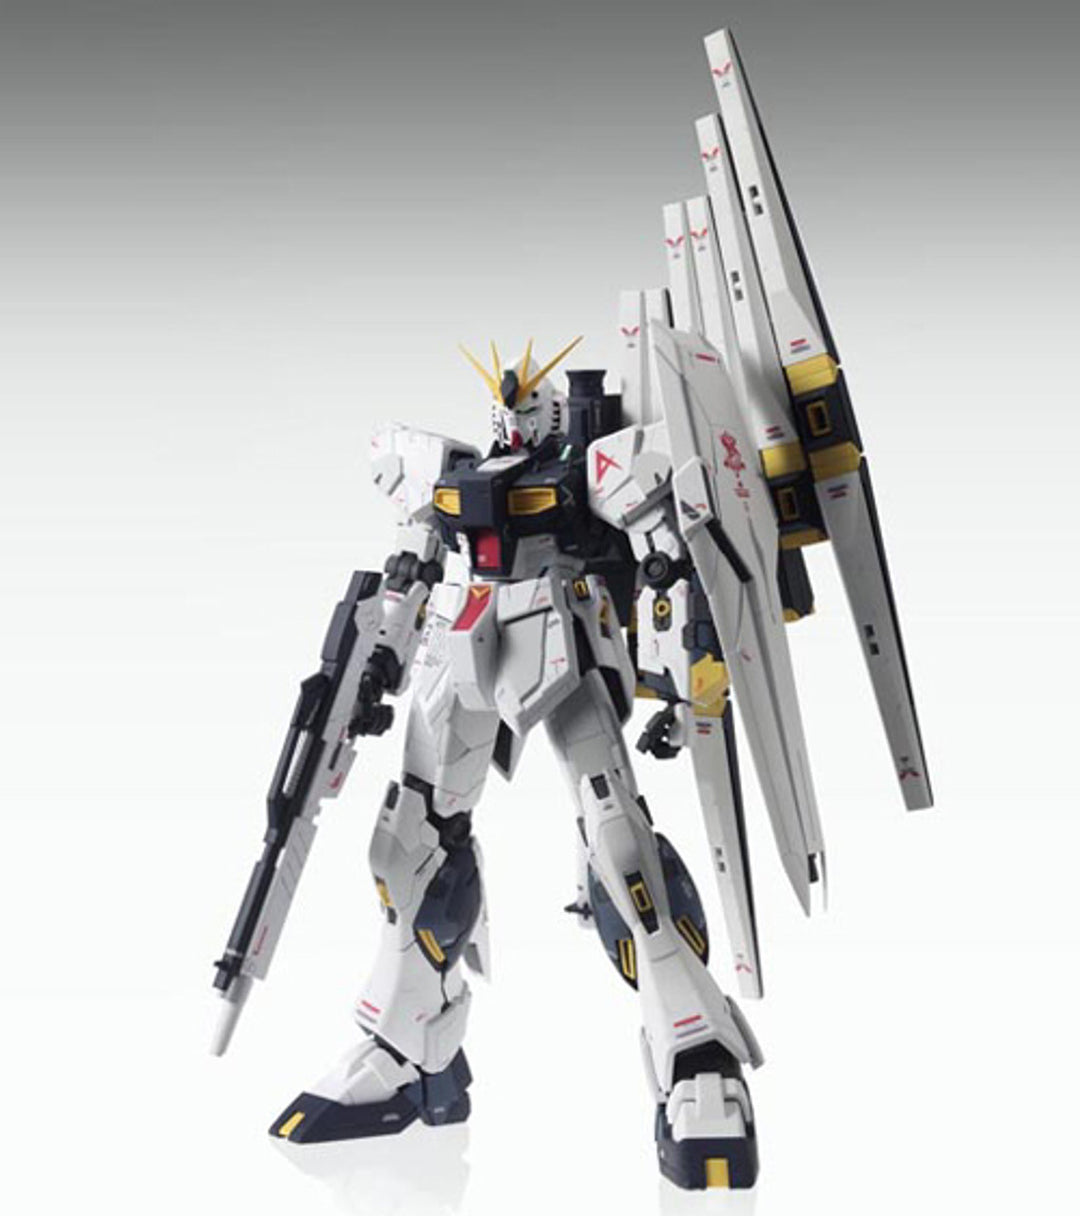 Bandai Master Grade RX-93 ν Gundam "Ver.Ka" E.F.S.F. Amuro Ray's Customize Mobile Suit for New Type